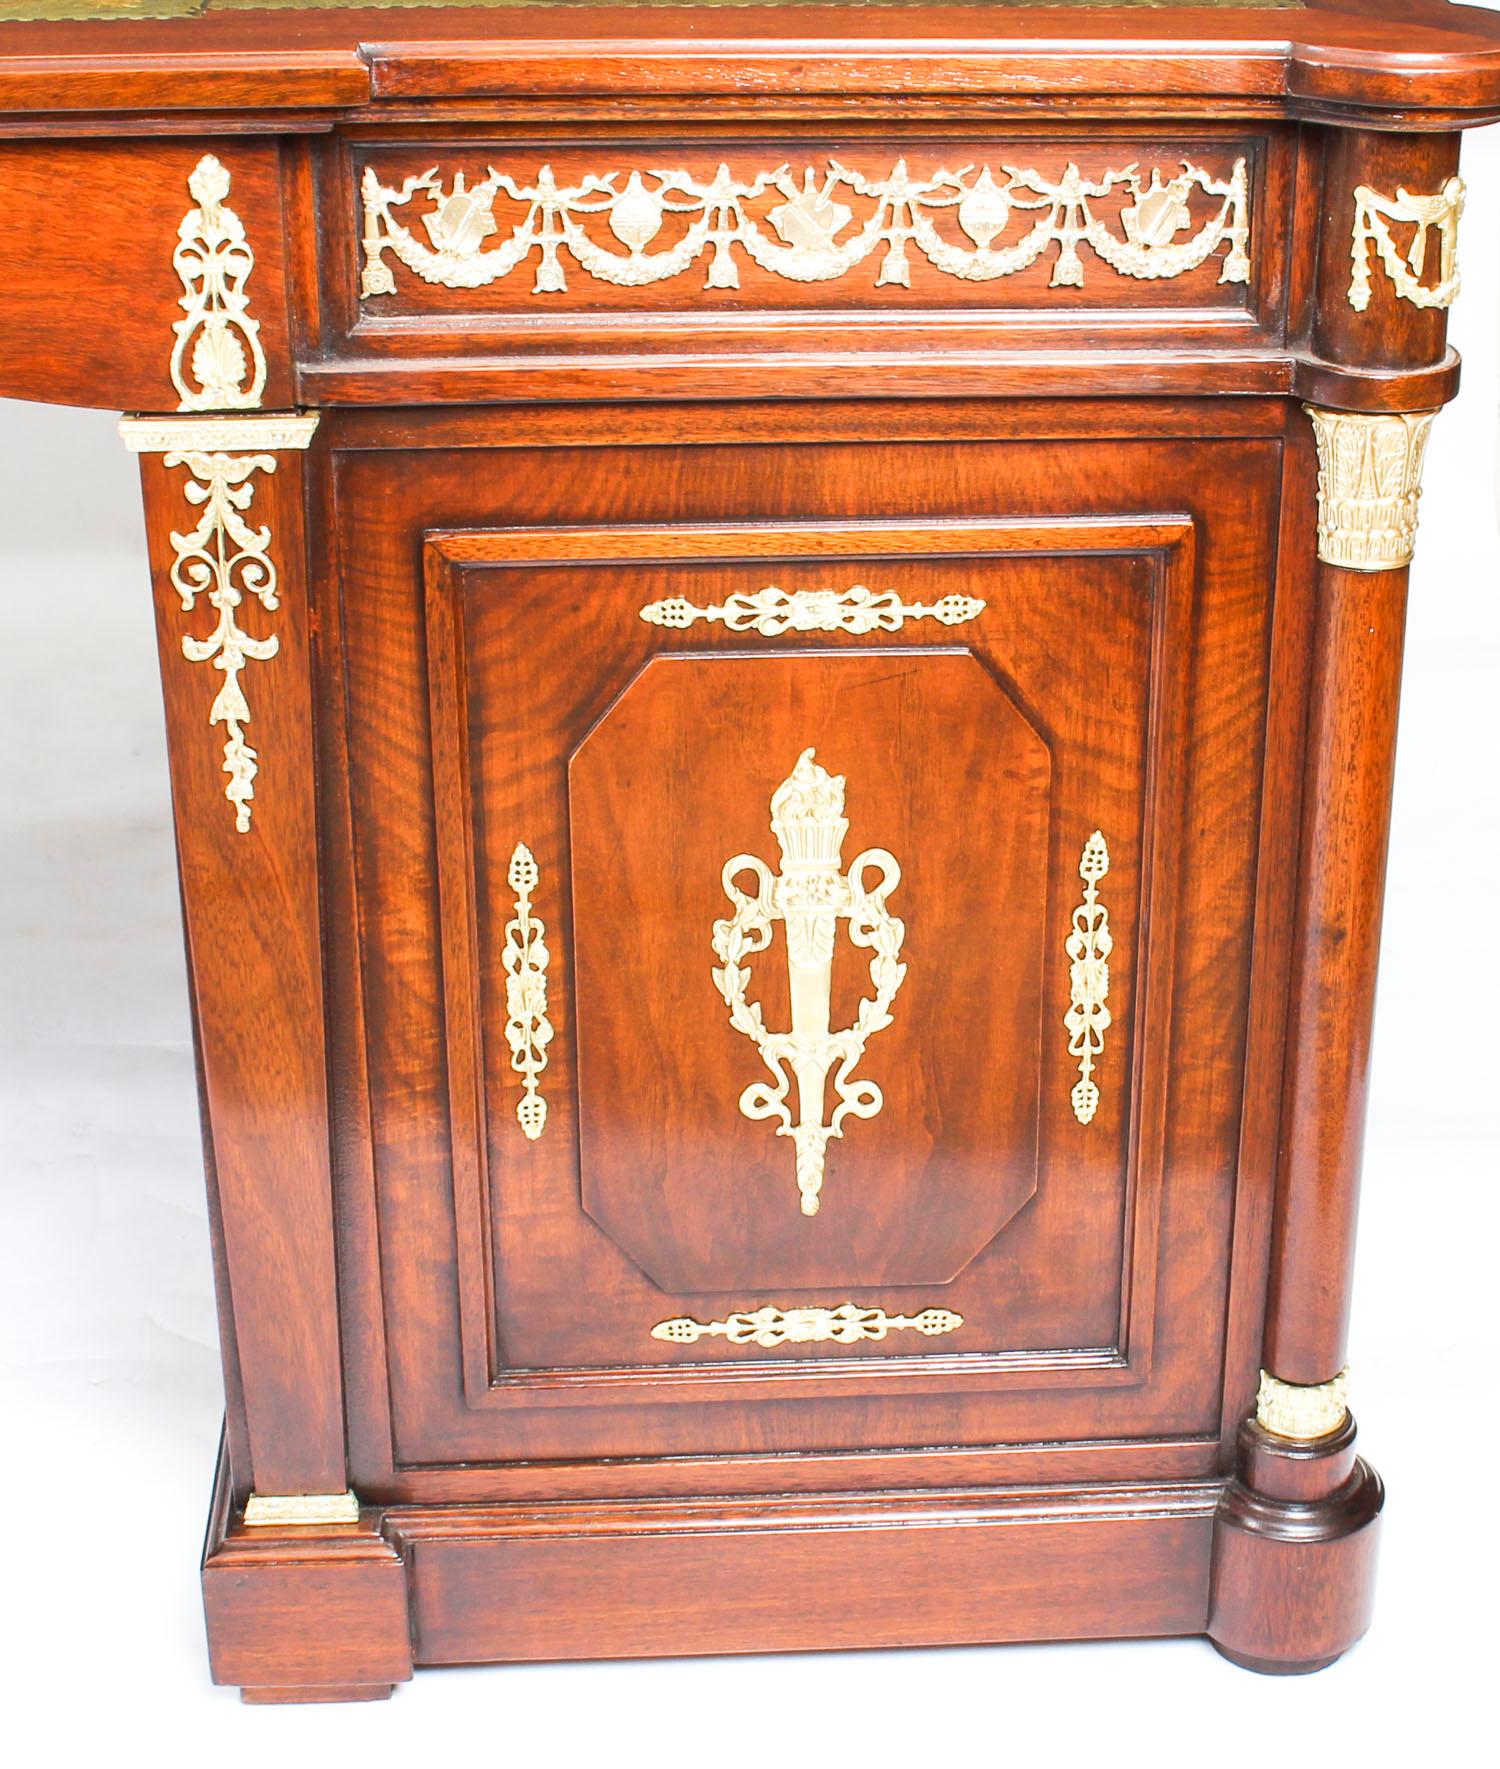 Antique Empire Revival French Ormolu Mounted Desk, 19th Century 13